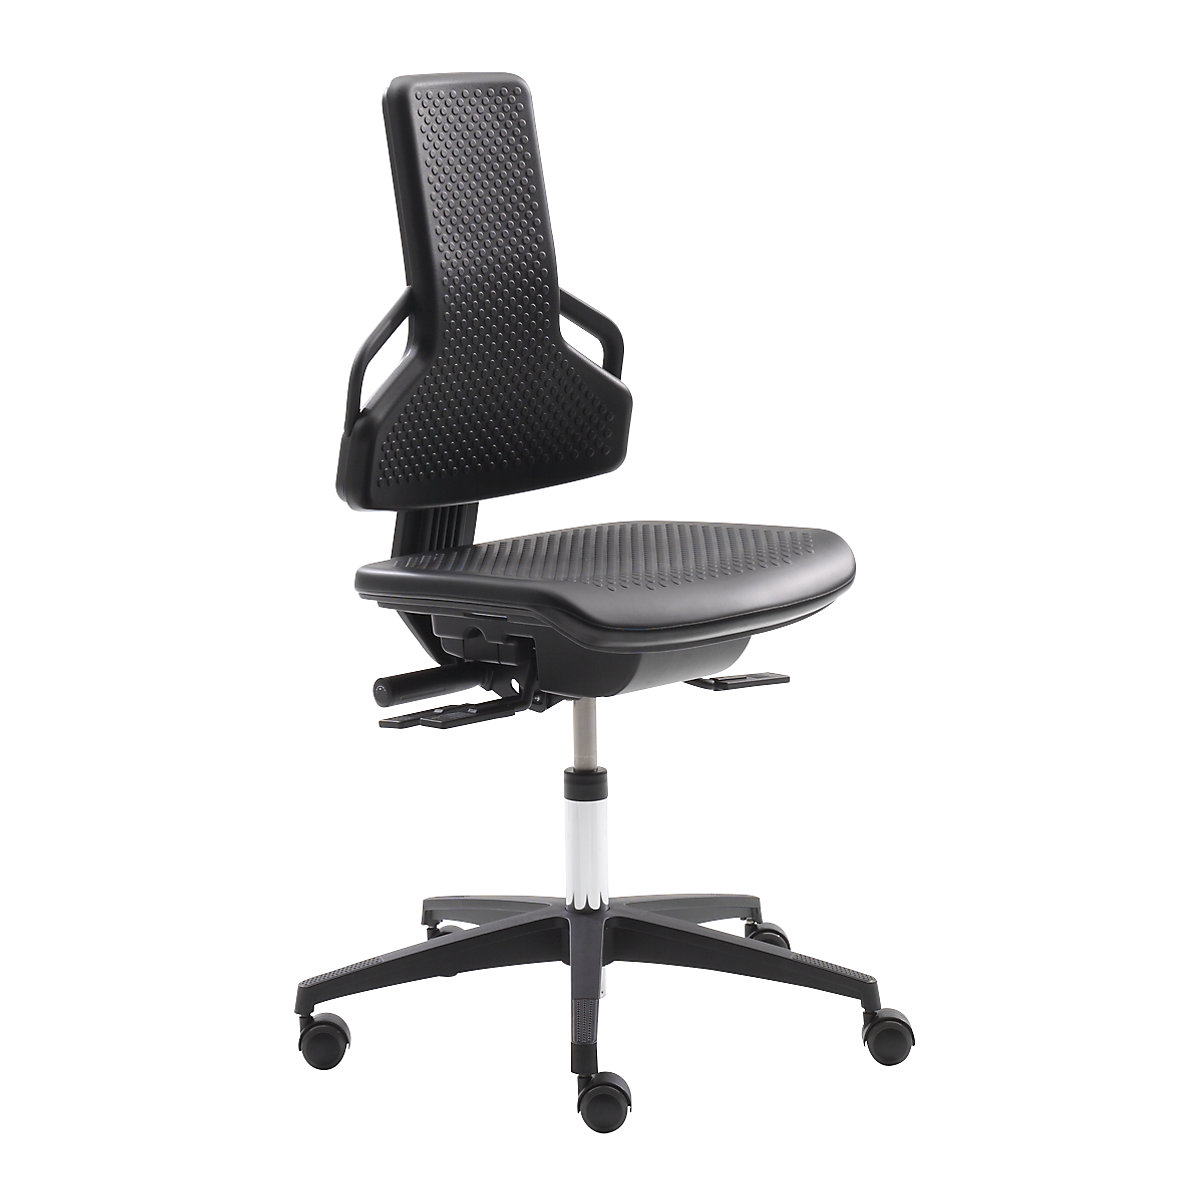 Industrial swivel chair – Dauphin